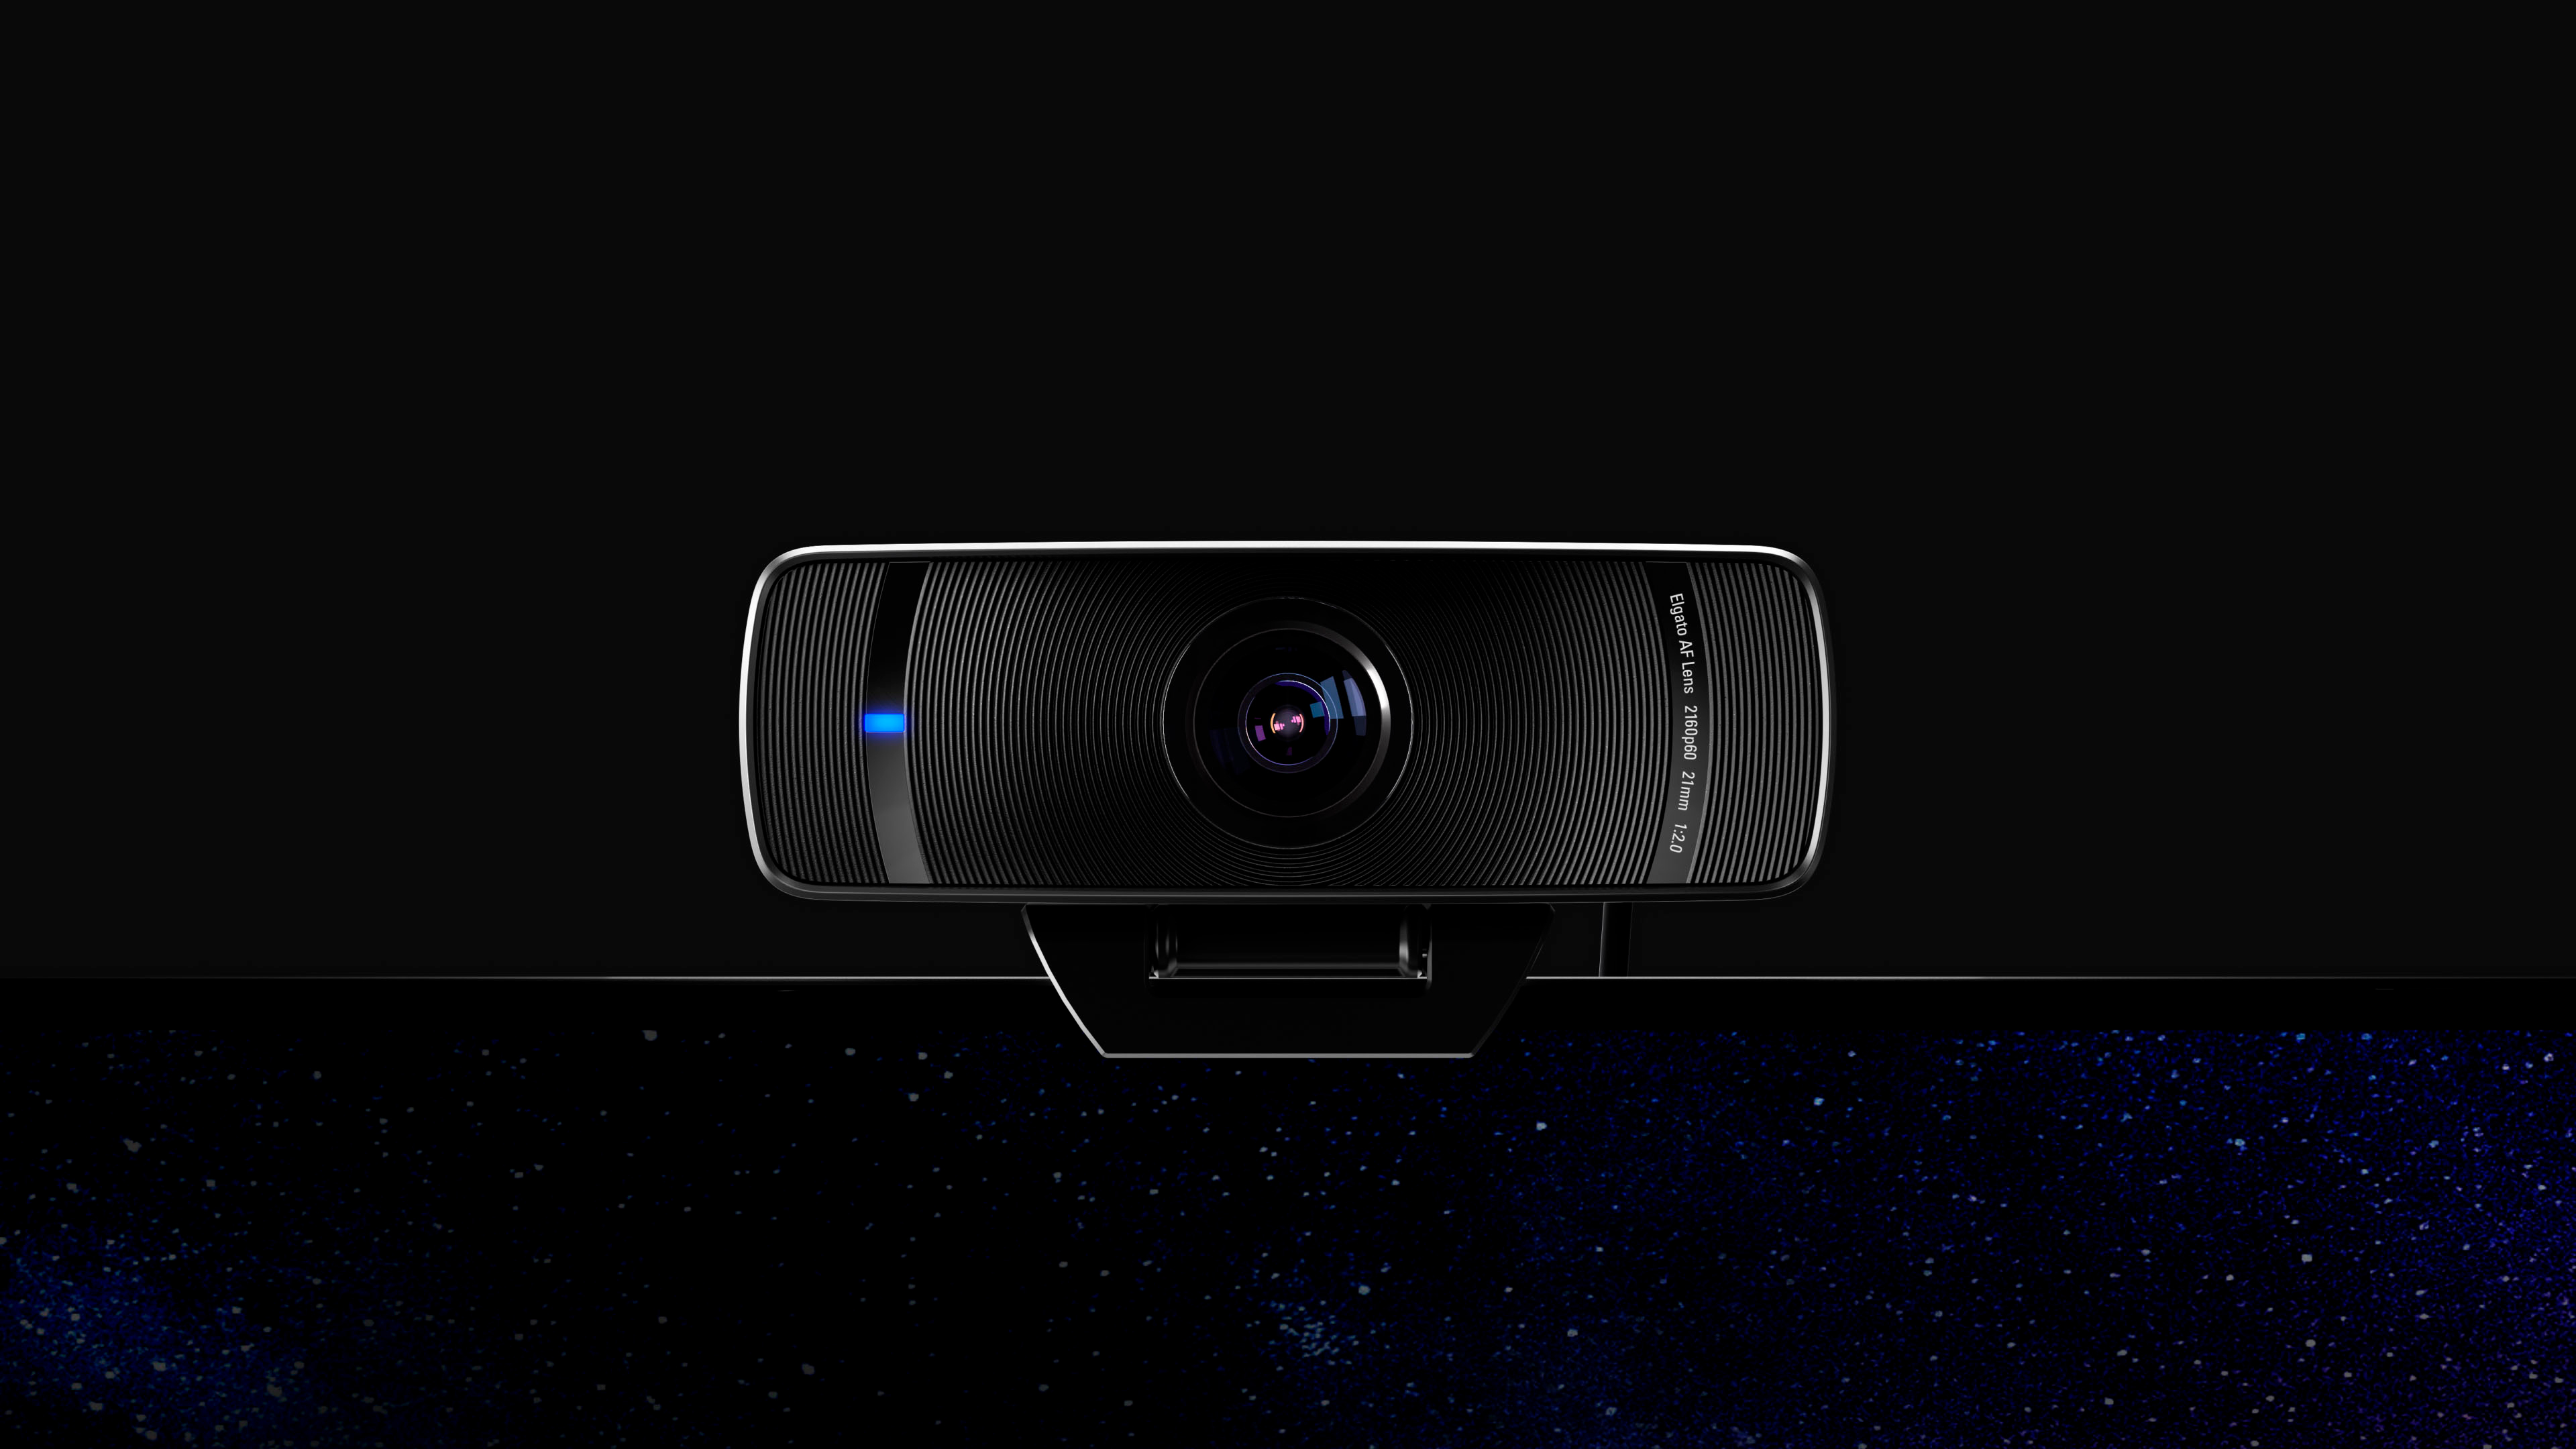 Original Elgato Facecam-1080p60 True Full HD Webcam for Live  Streaming,Video Calls,Sony Sensor,,DSLR